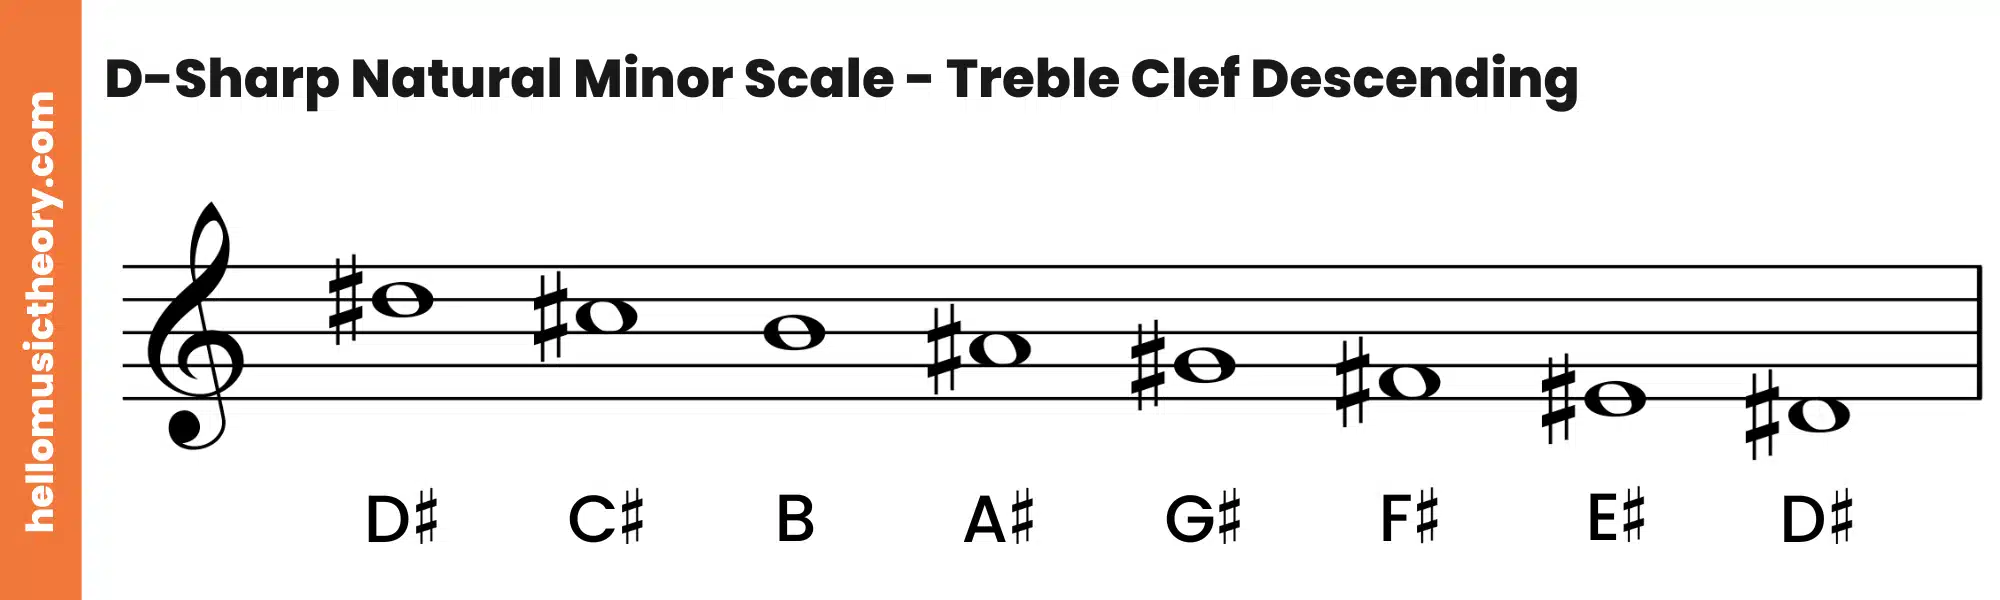 D-Sharp-Natural-Minor-Scale-Treble-Clef-Descending